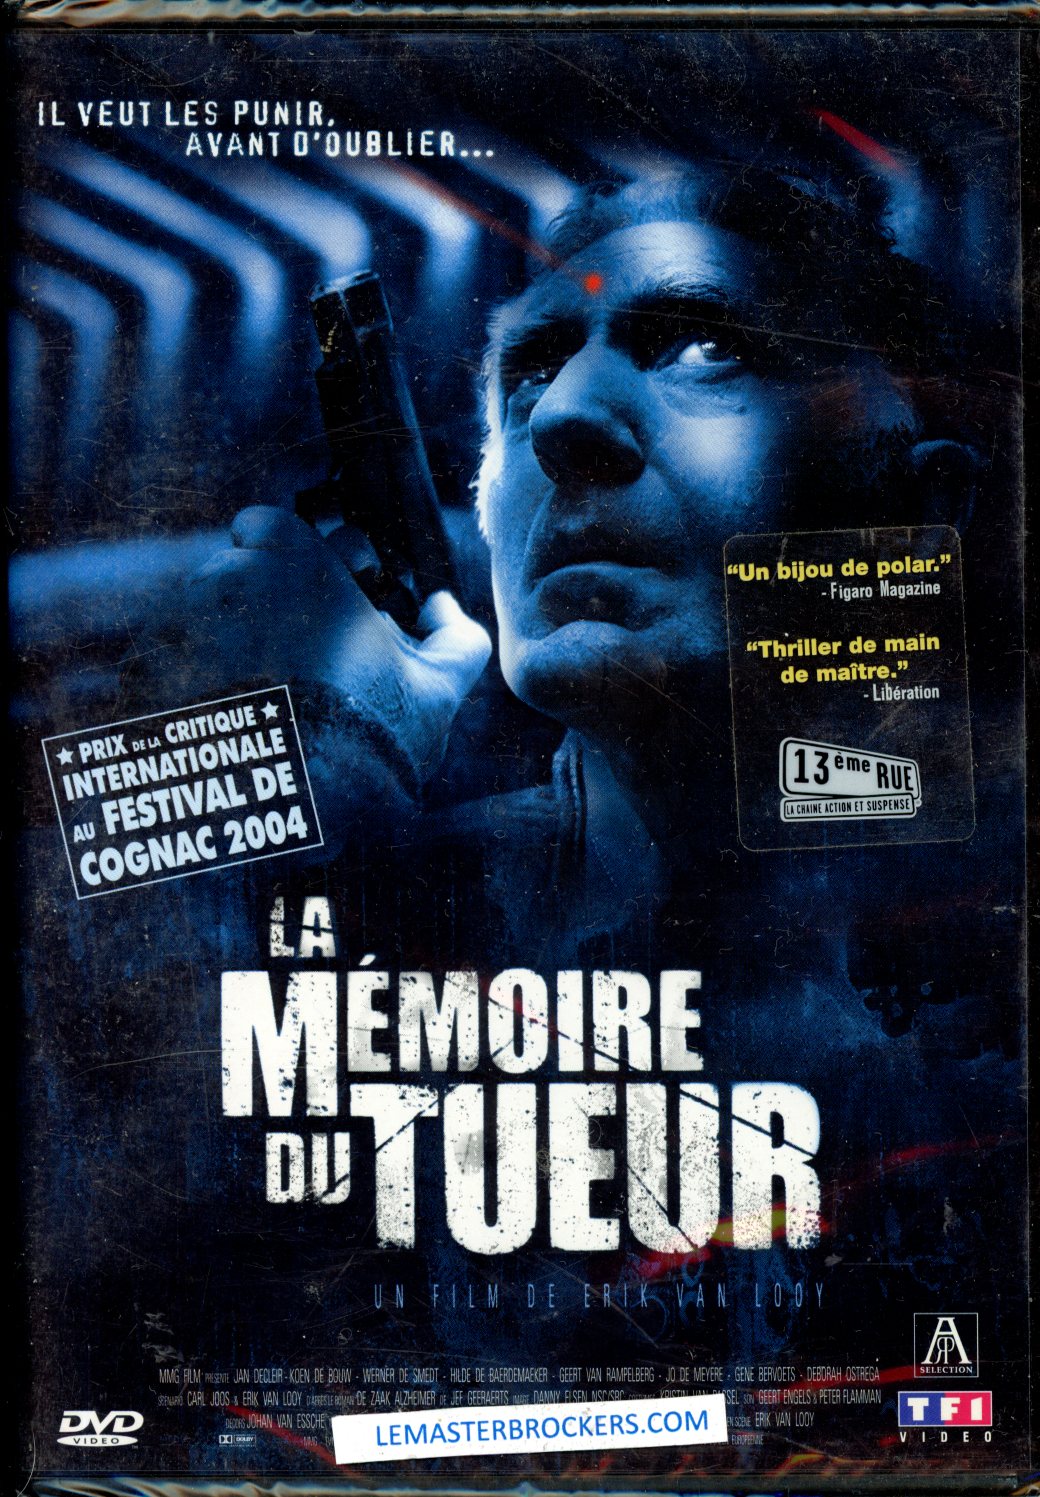 LA MEMOIRE DU TUEUR DVD NEUF 3384442055567